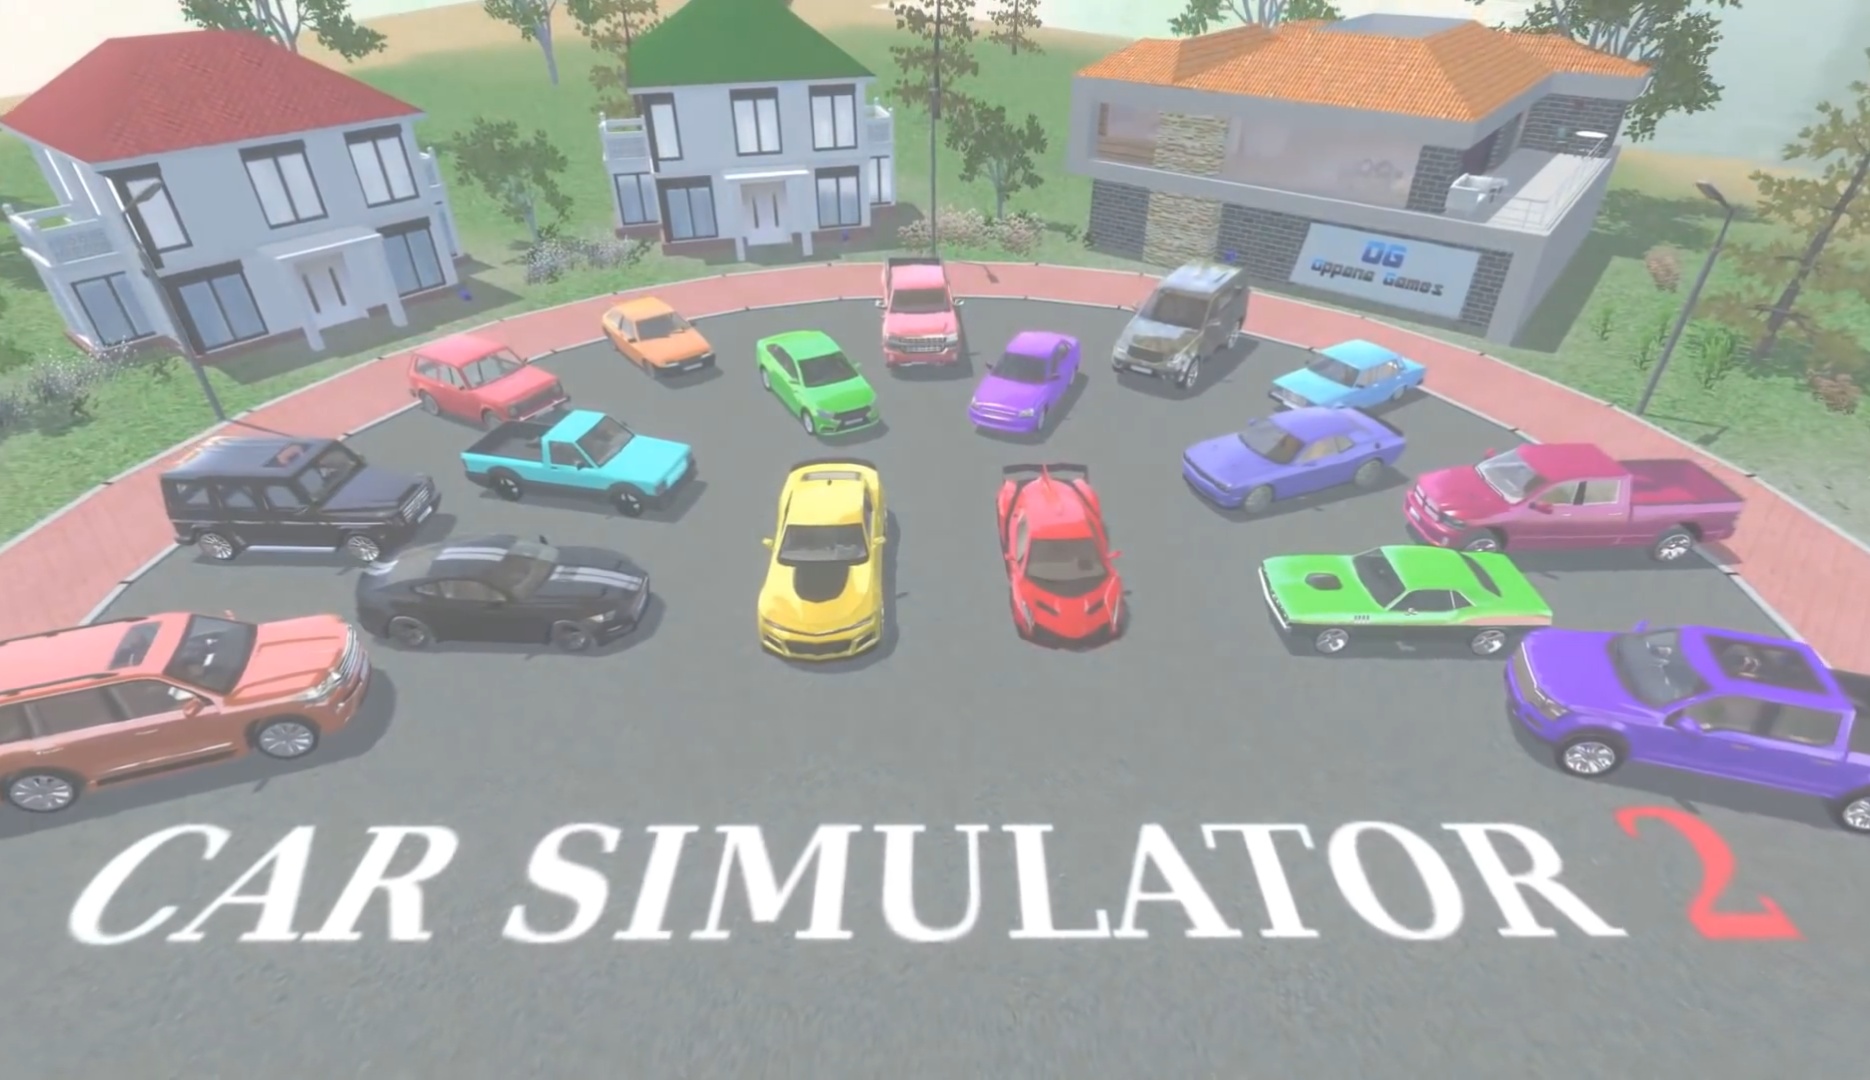 Car Simulator 2 MOD APK